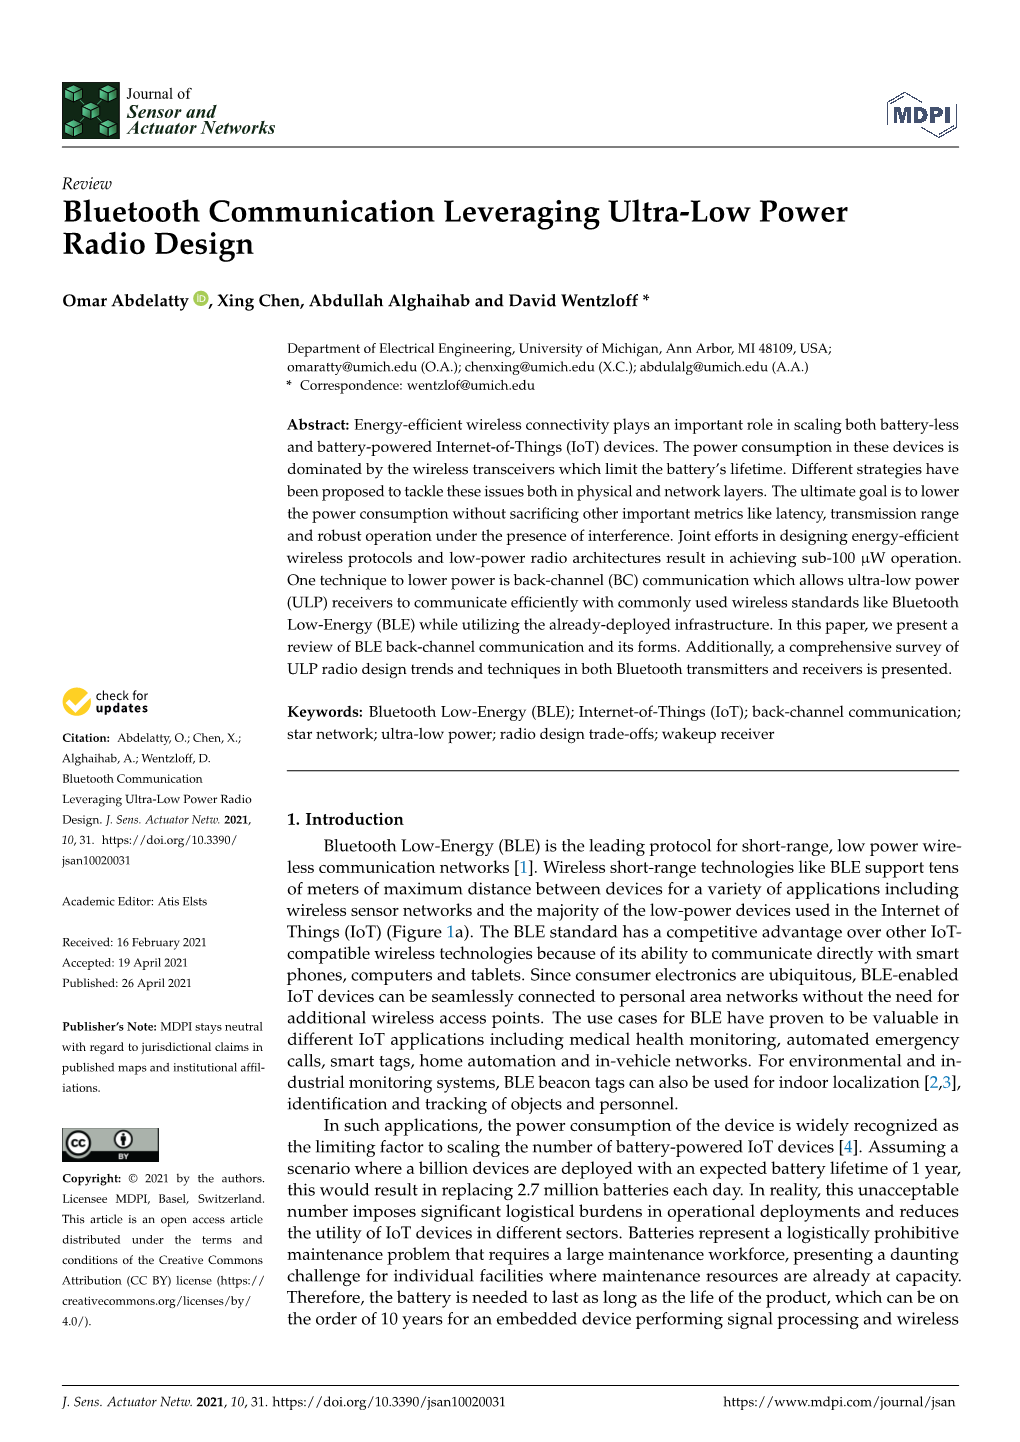 Bluetooth Communication Leveraging Ultra-Low Power Radio Design